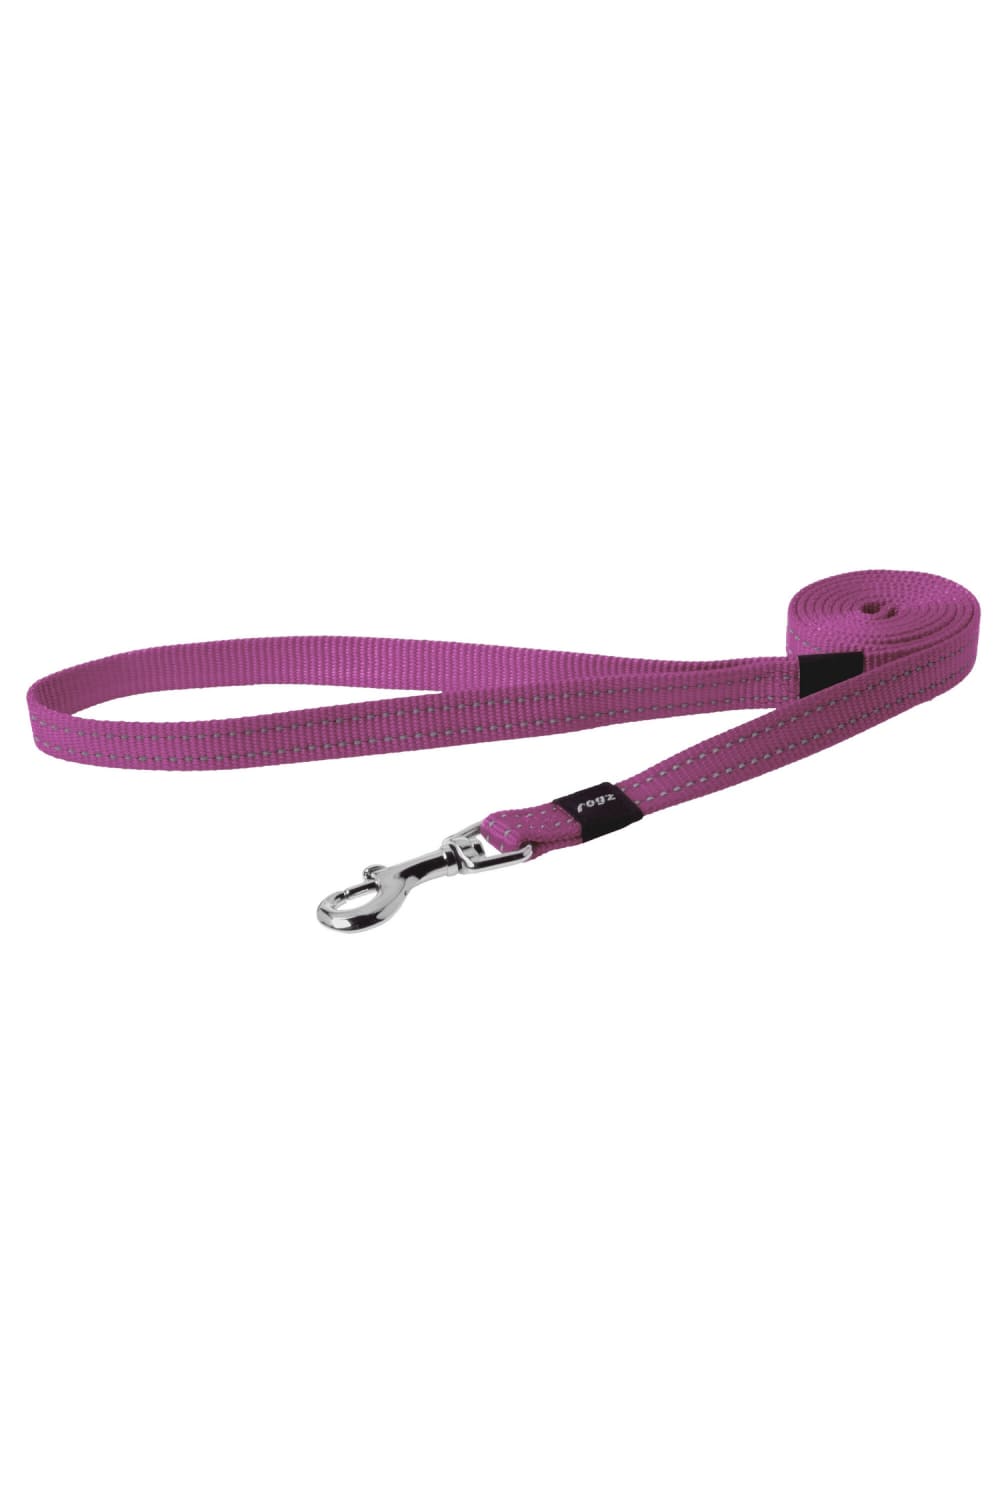 Rogz Utility Dog Lead (Pink) (120cm x 2cm)